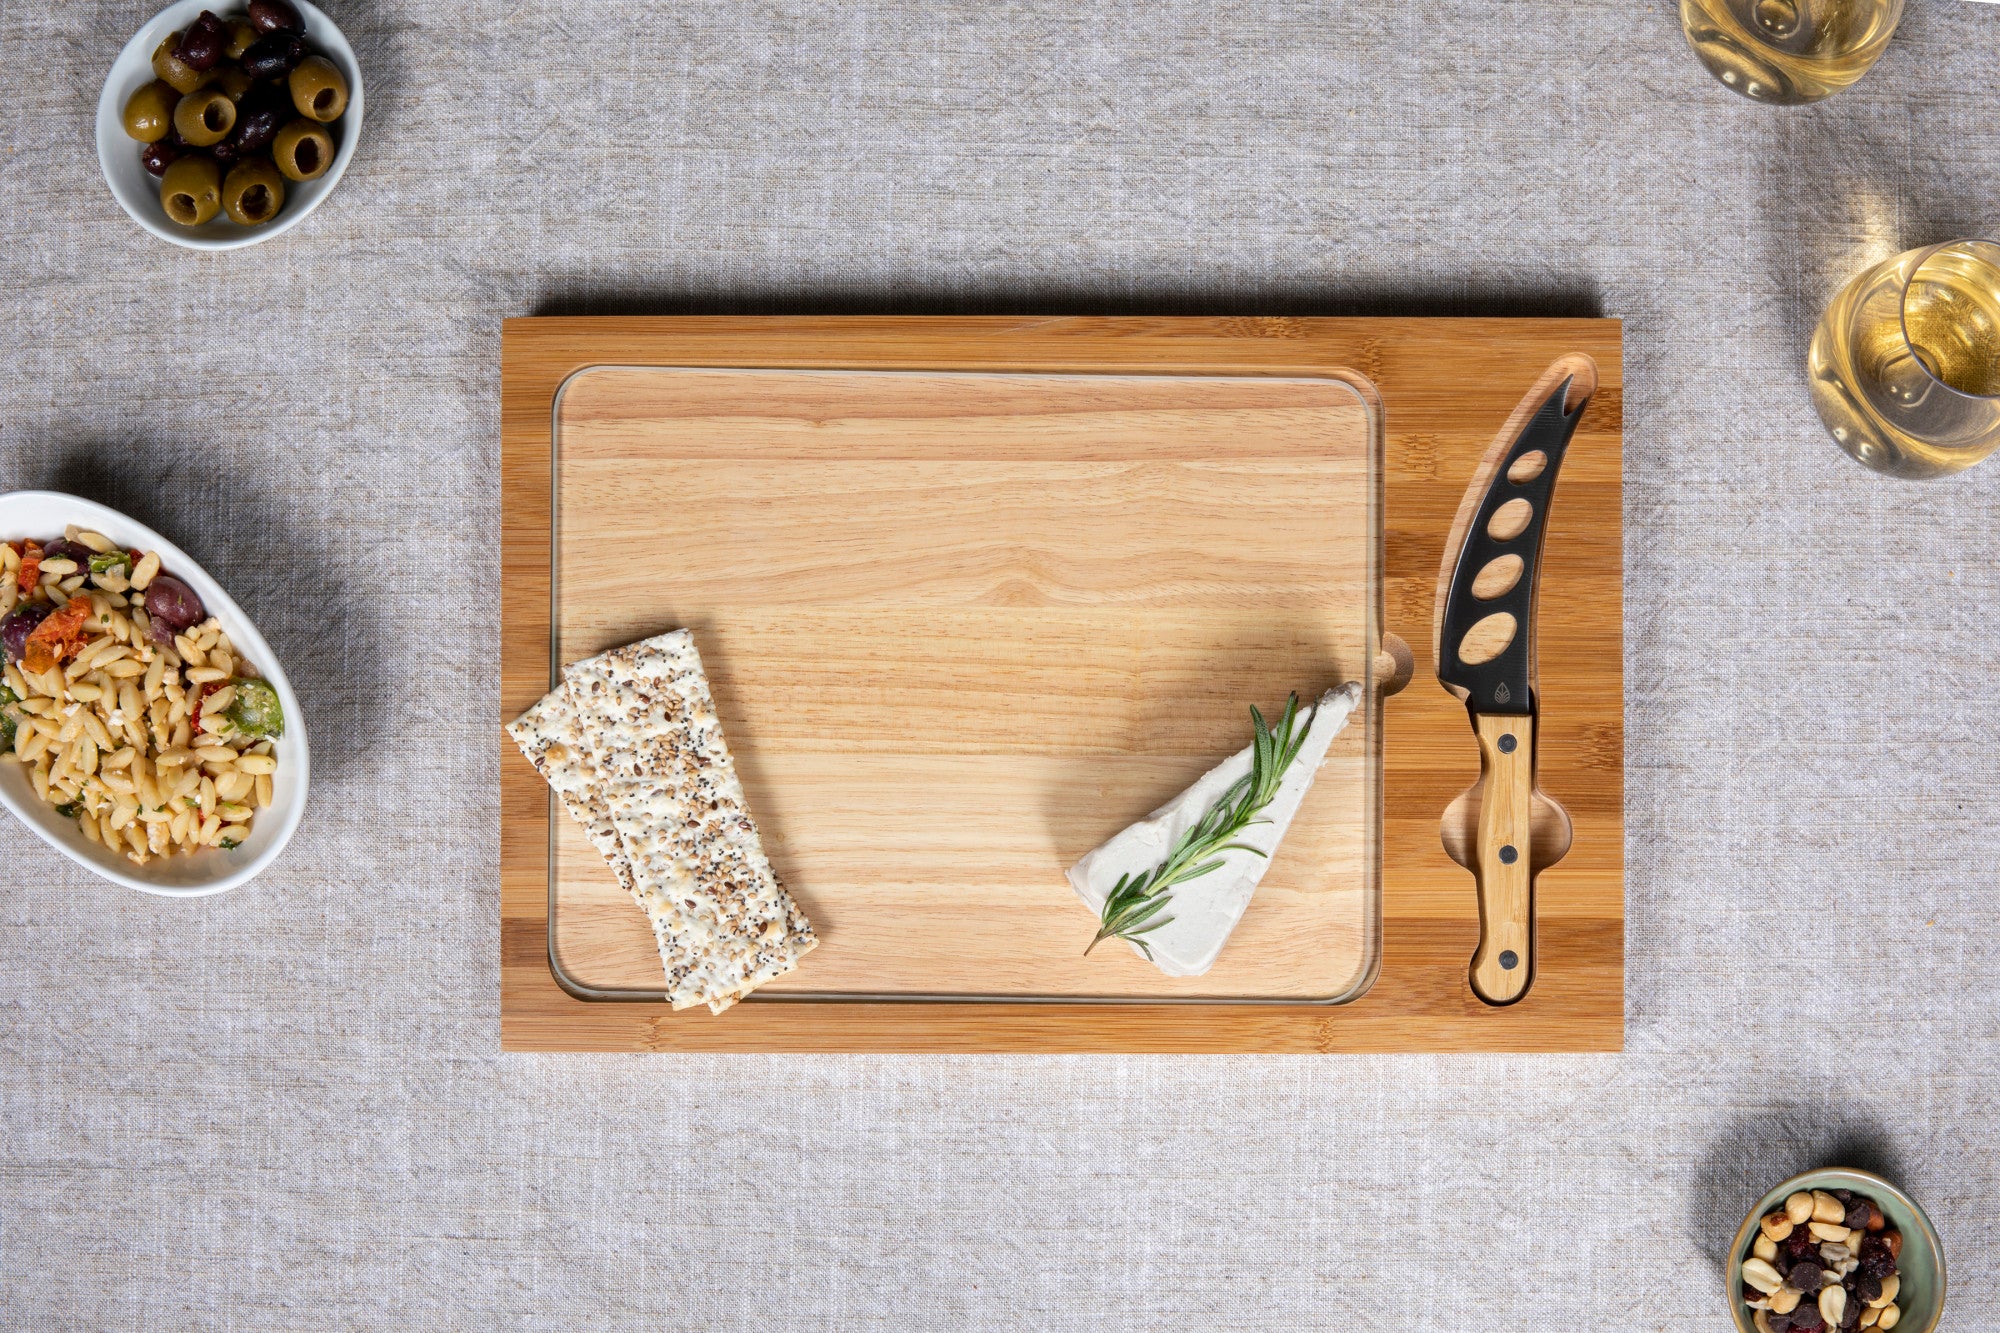 Minnesota Golden Gophers - Icon Glass Top Cutting Board & Knife Set